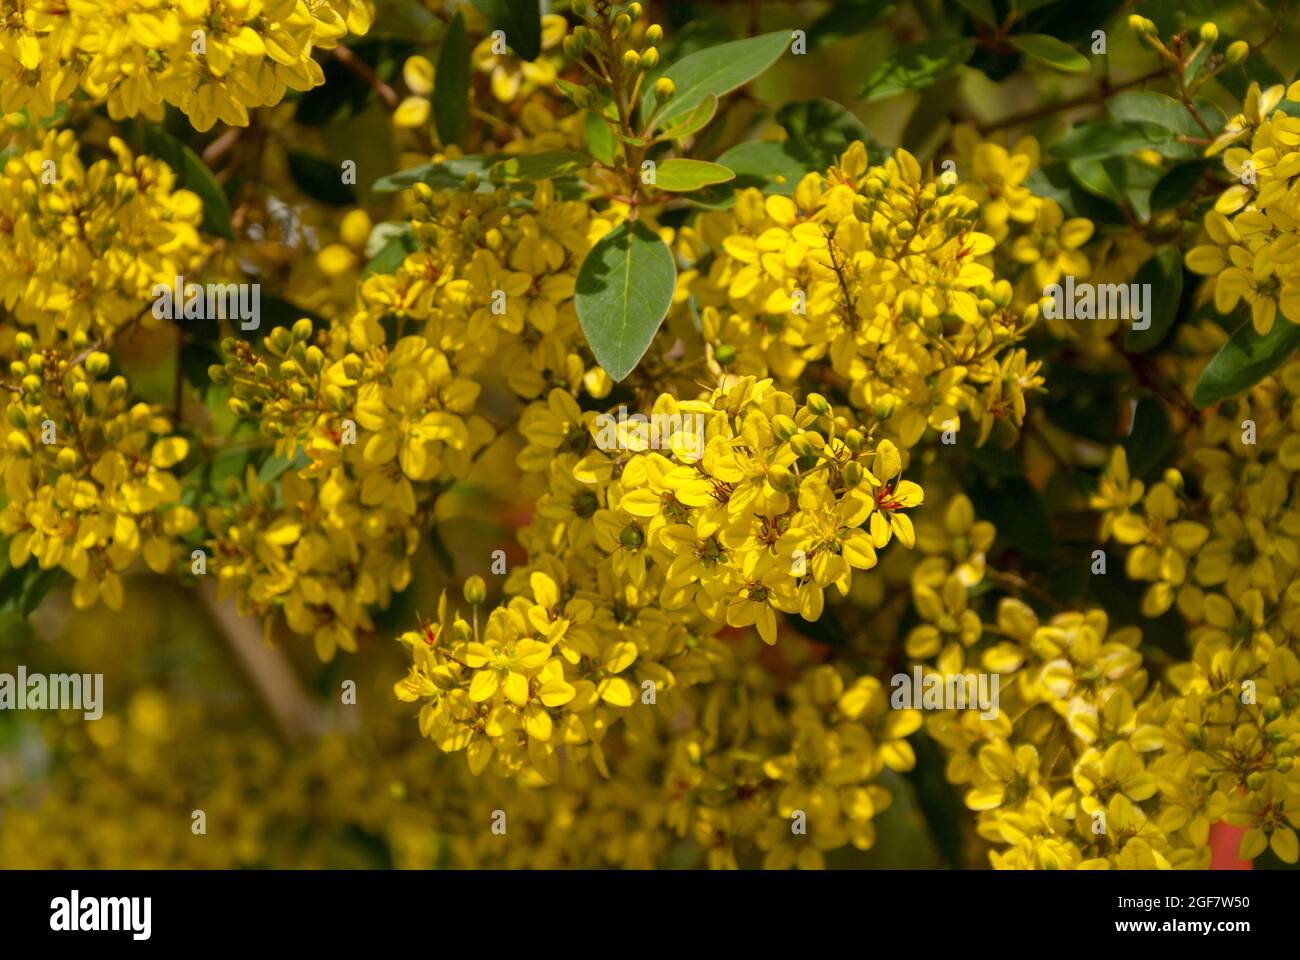 Thryallis glauca, Galphimia, Gold Shower yellow flower. Stock Photo